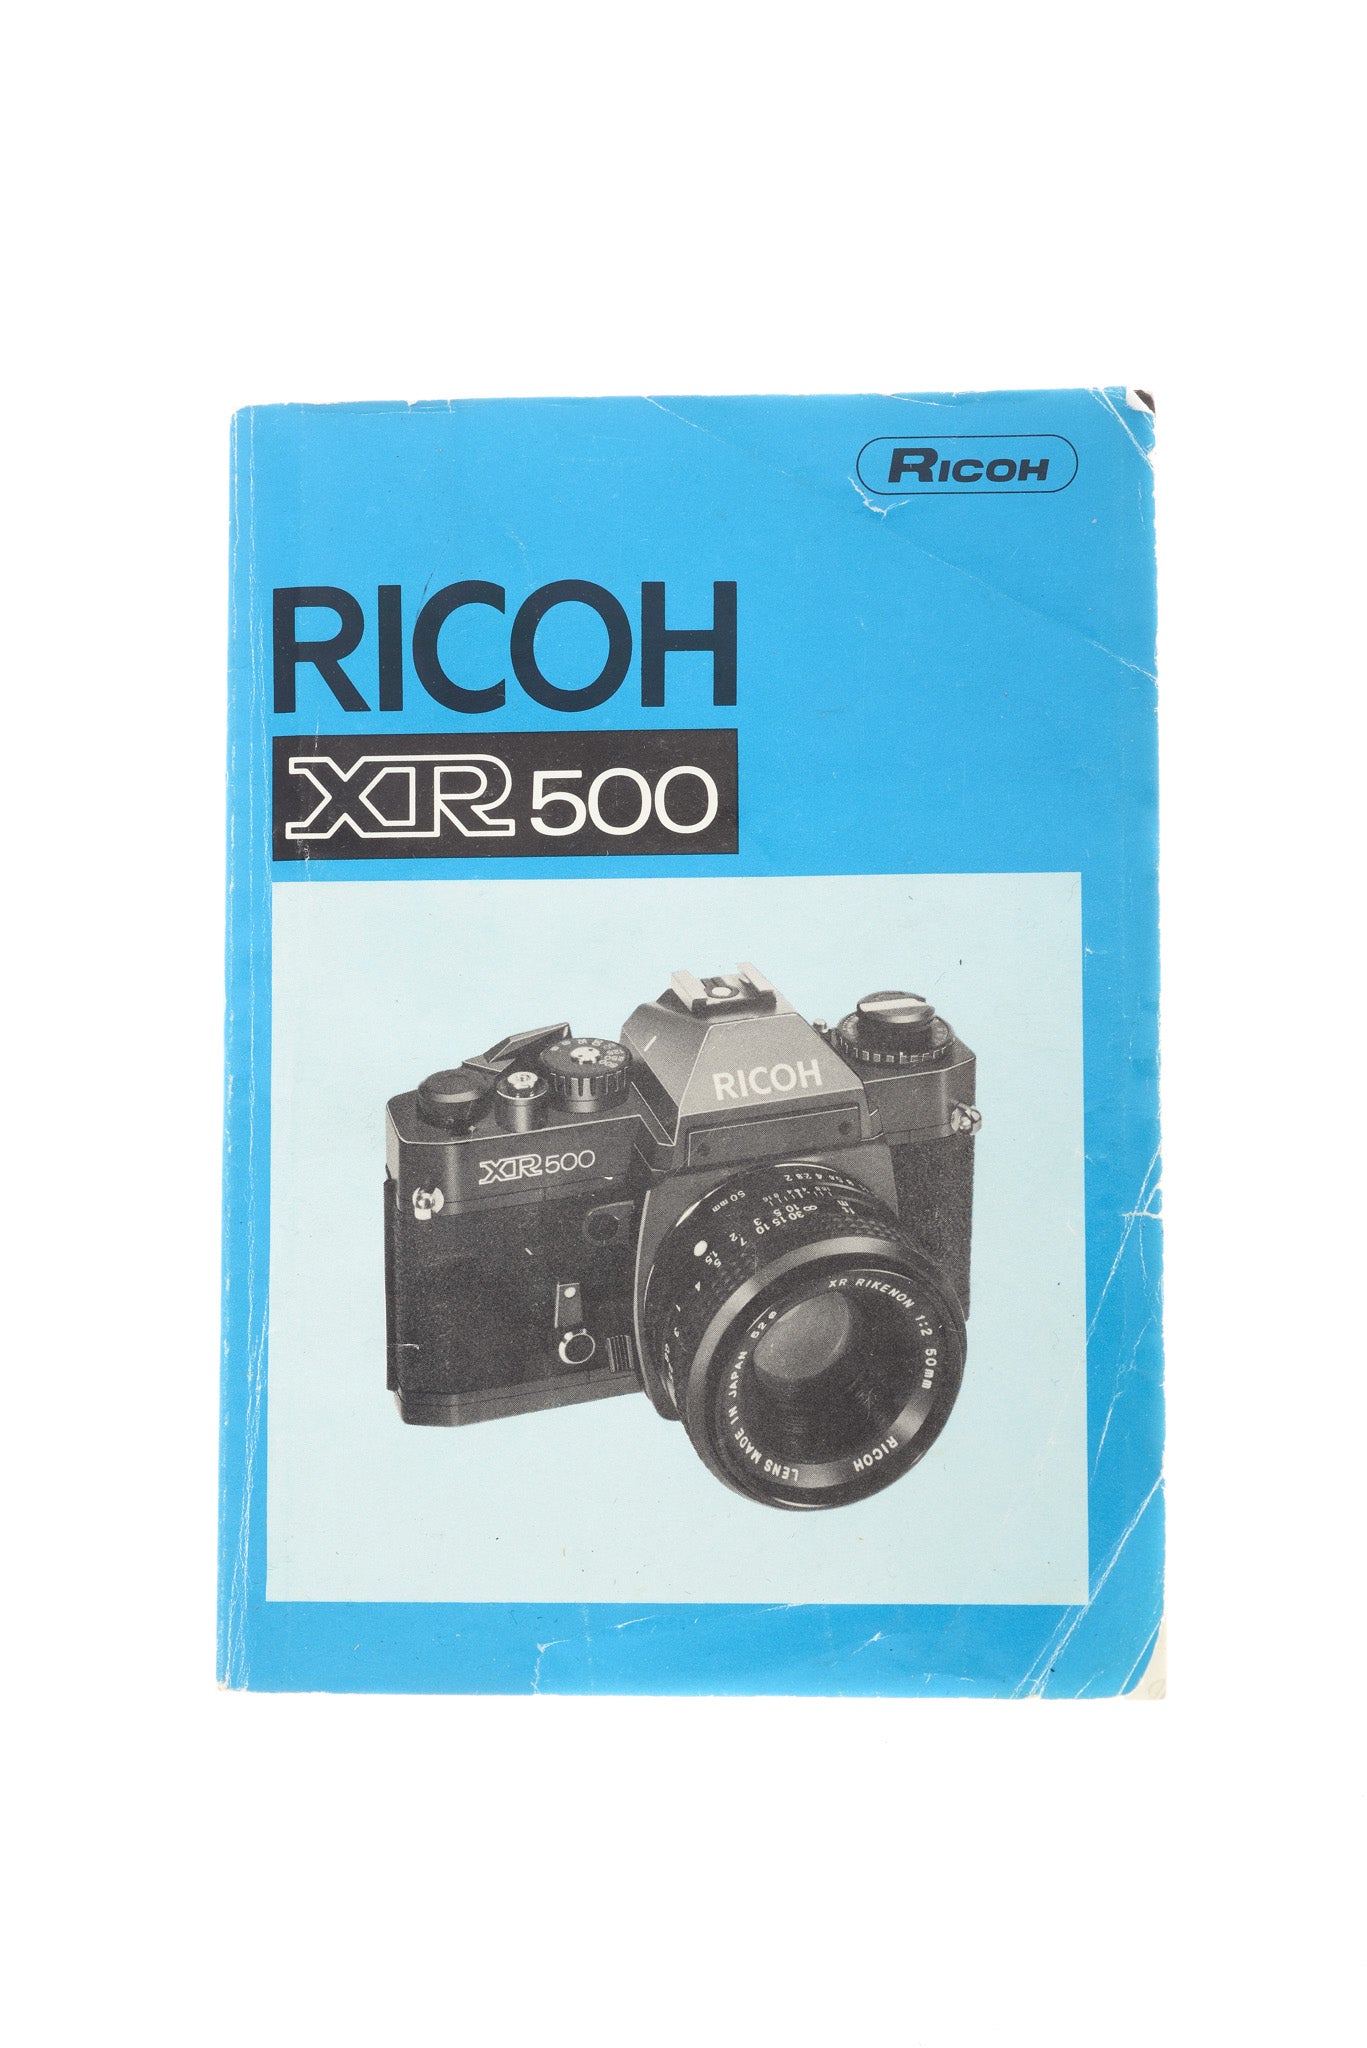 Ricoh XR 500 Instructions